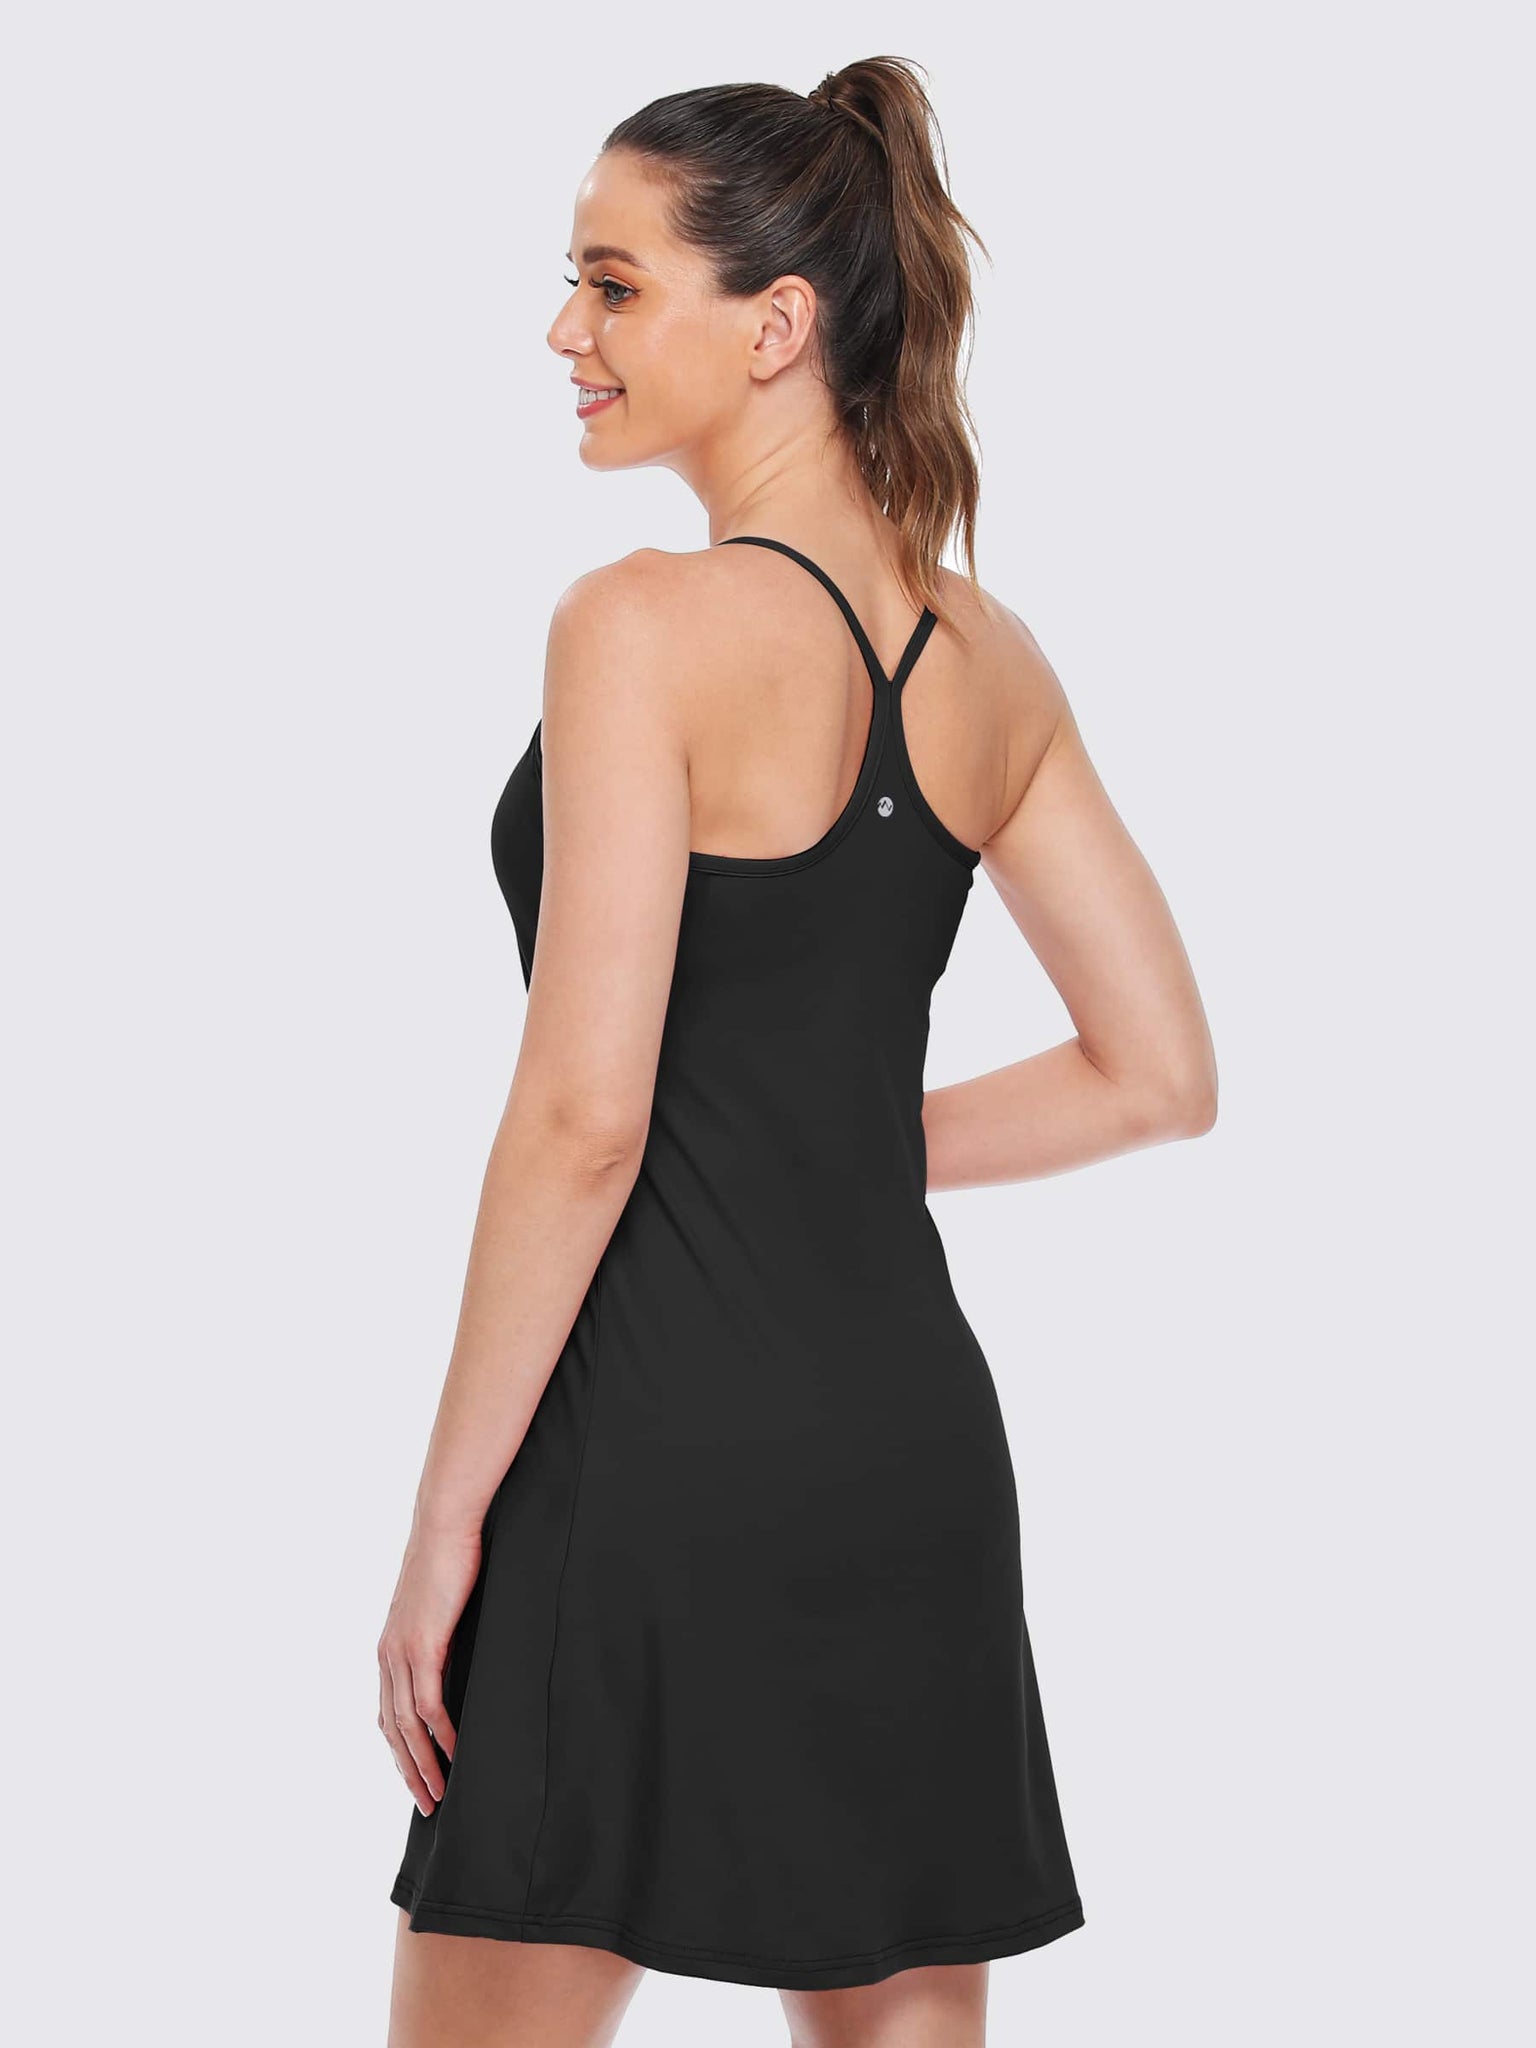 Women's Exercise Dress with Detachable Shorts_black_model1